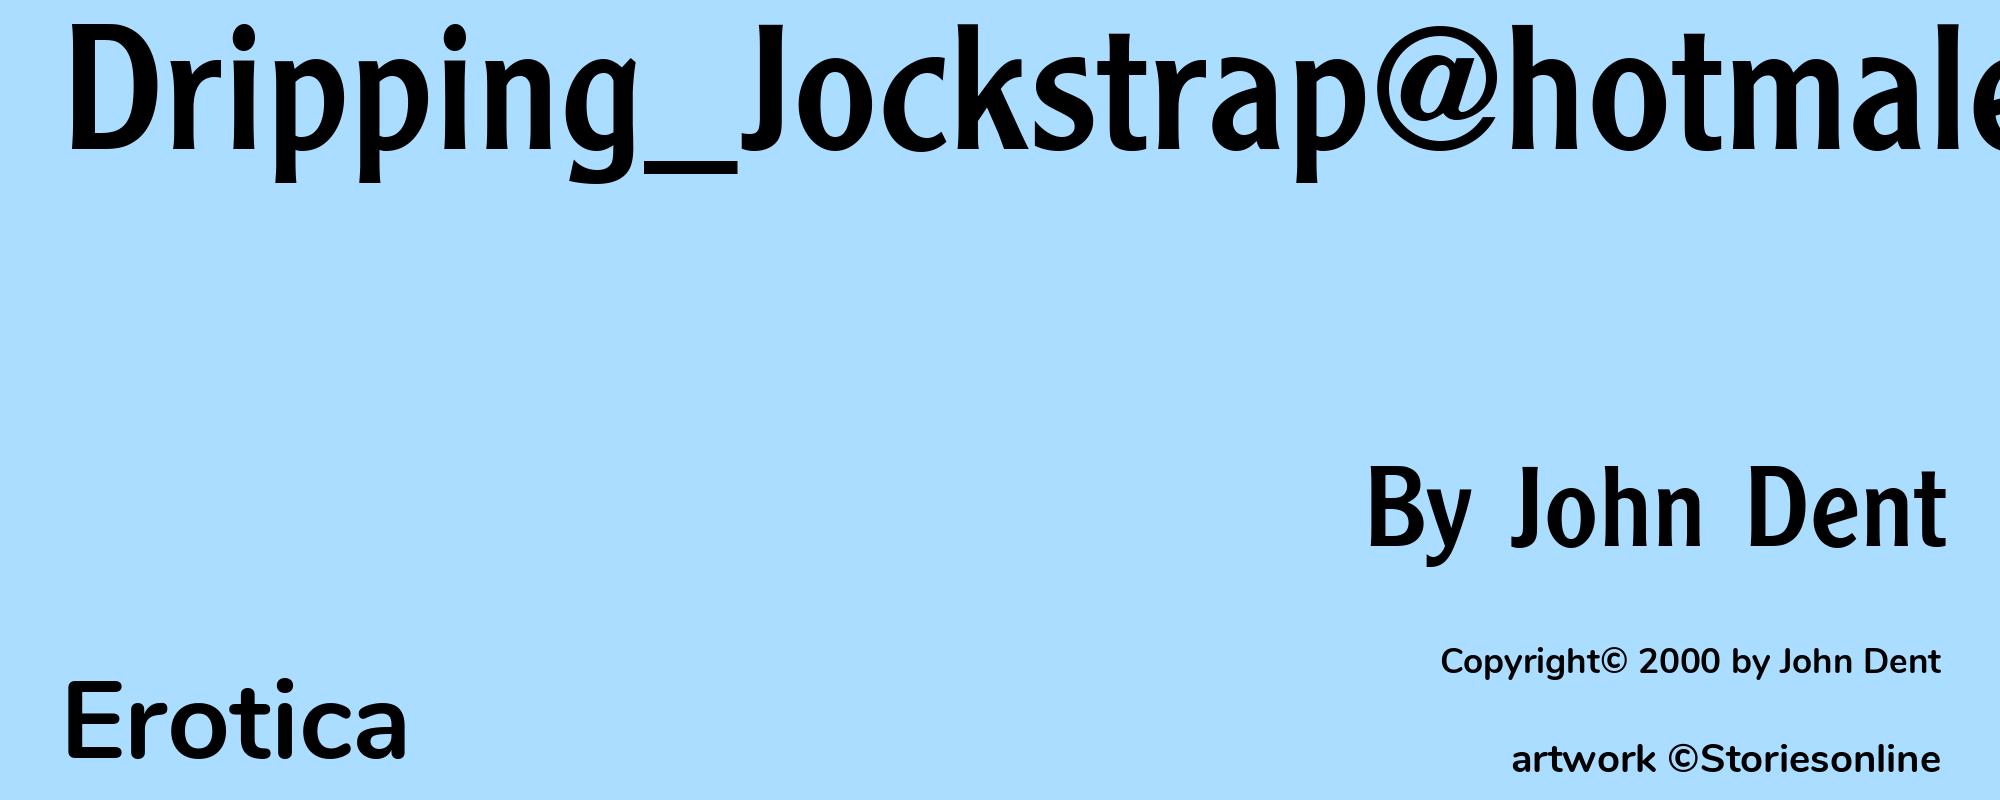 Dripping_Jockstrap@hotmale.com - Cover